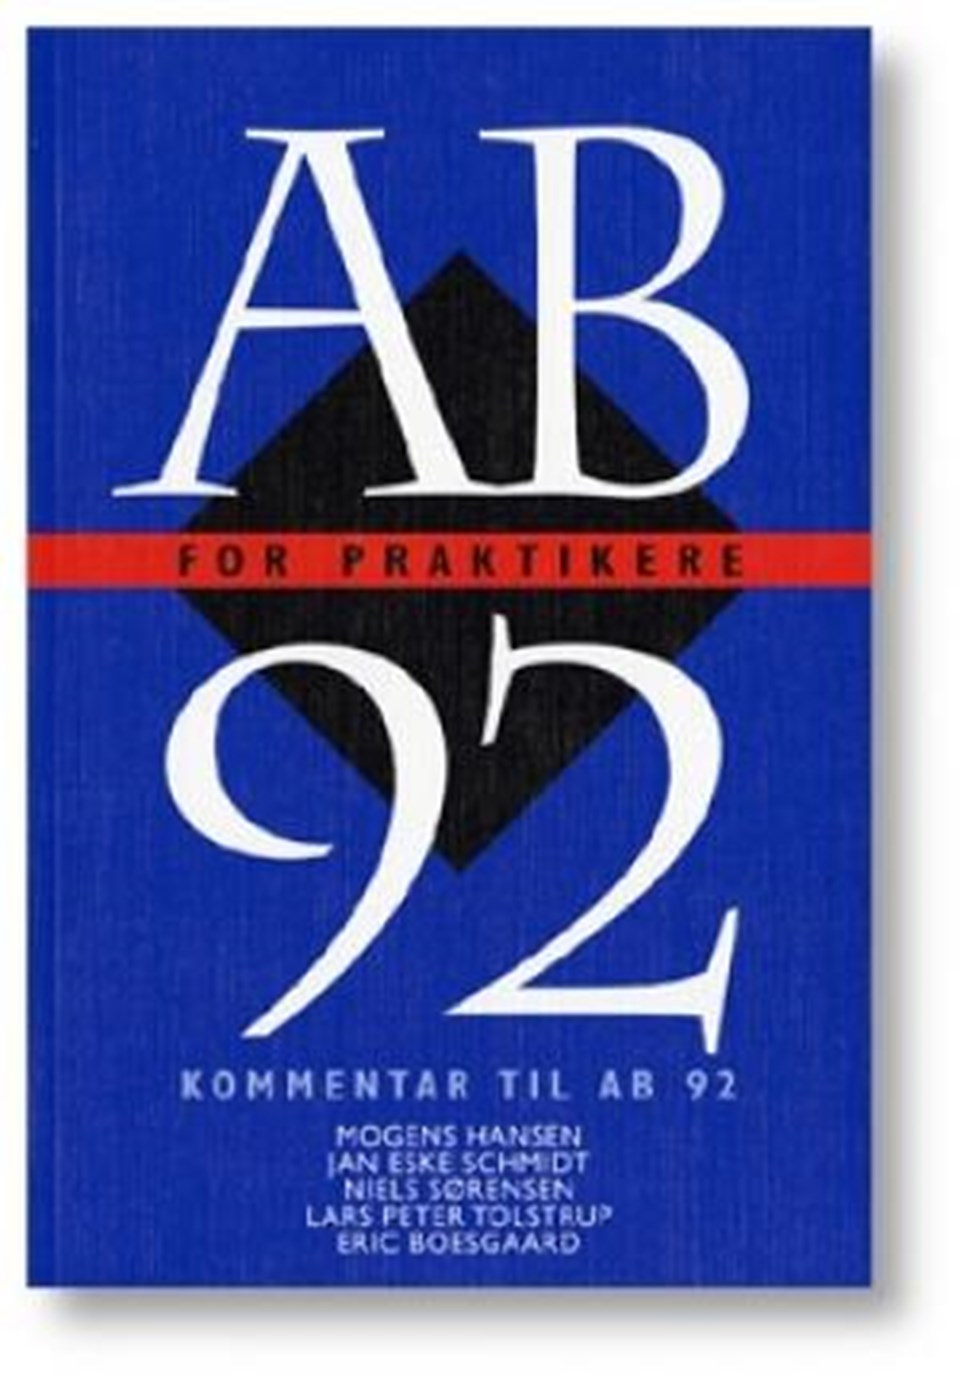 AB 92 for praktikere